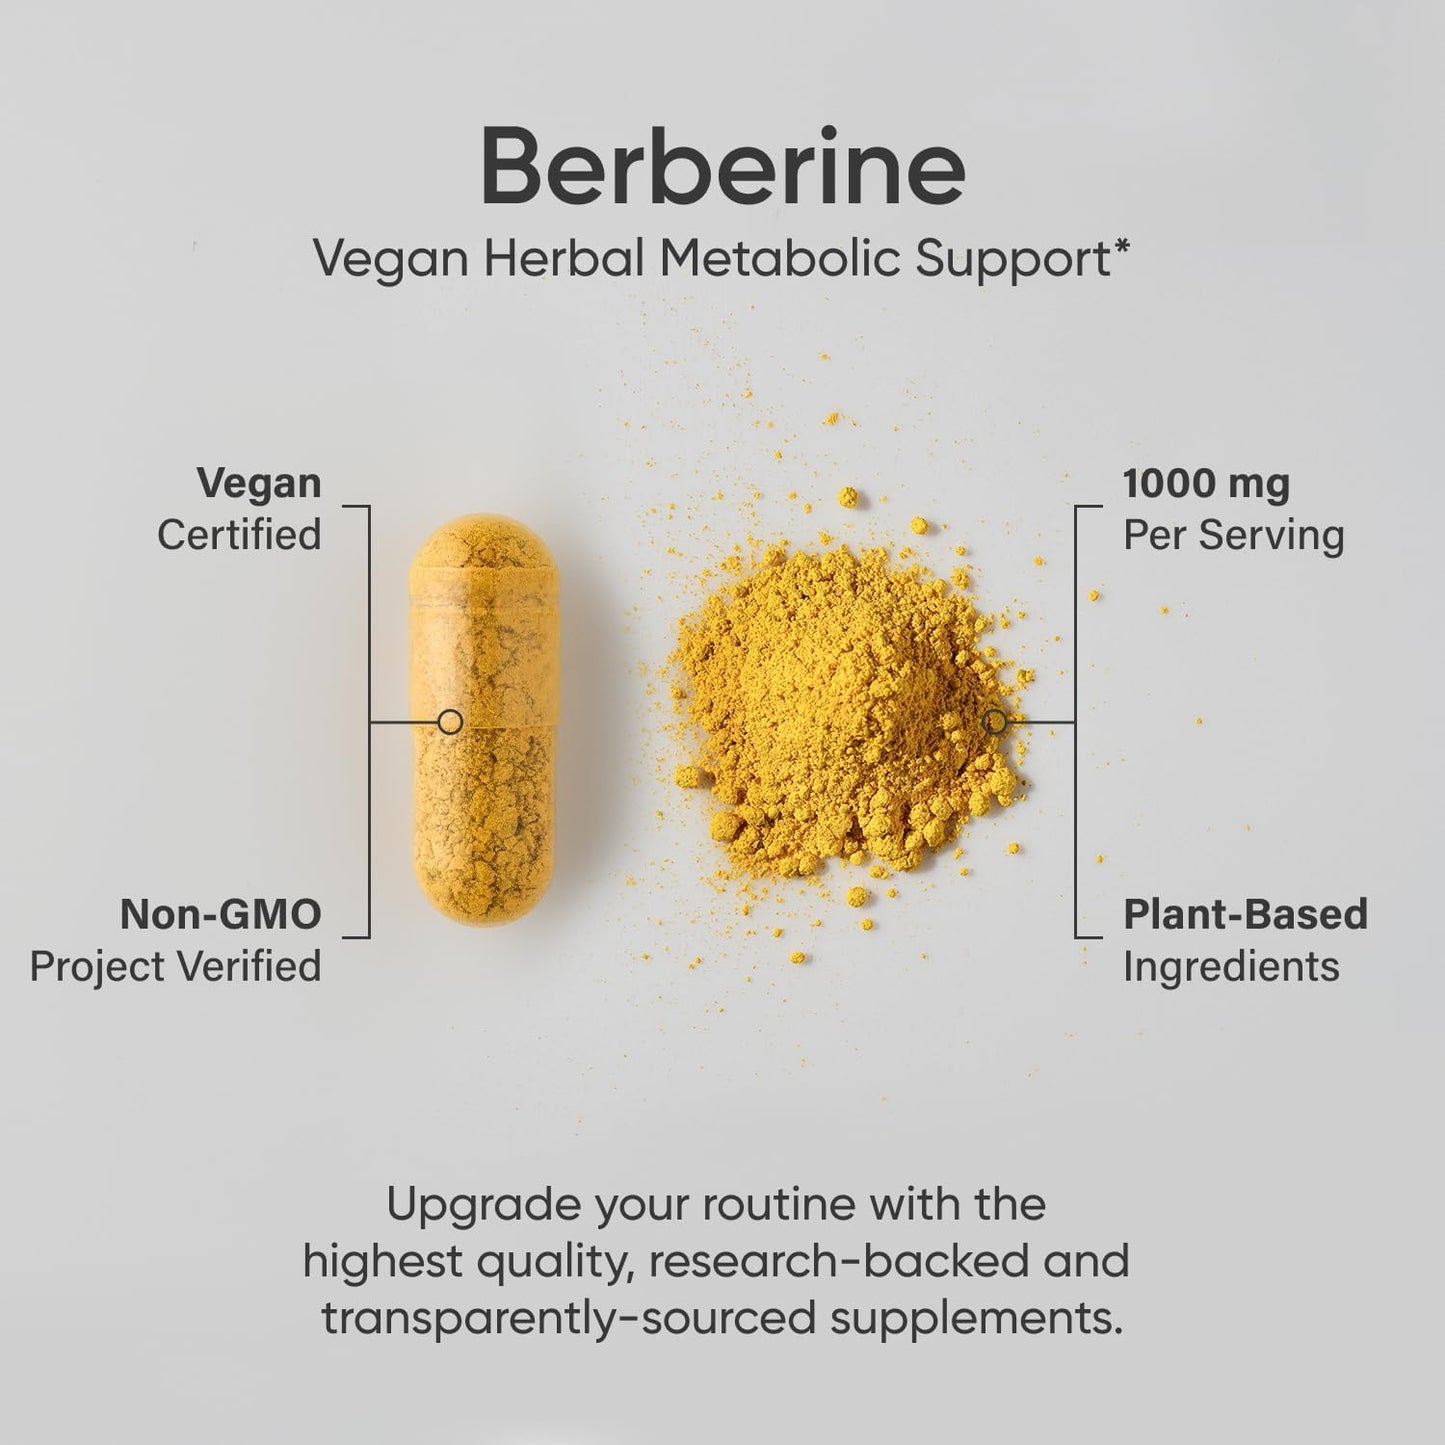 Sports Research Berberine - 1000 mg, 60 Capsules